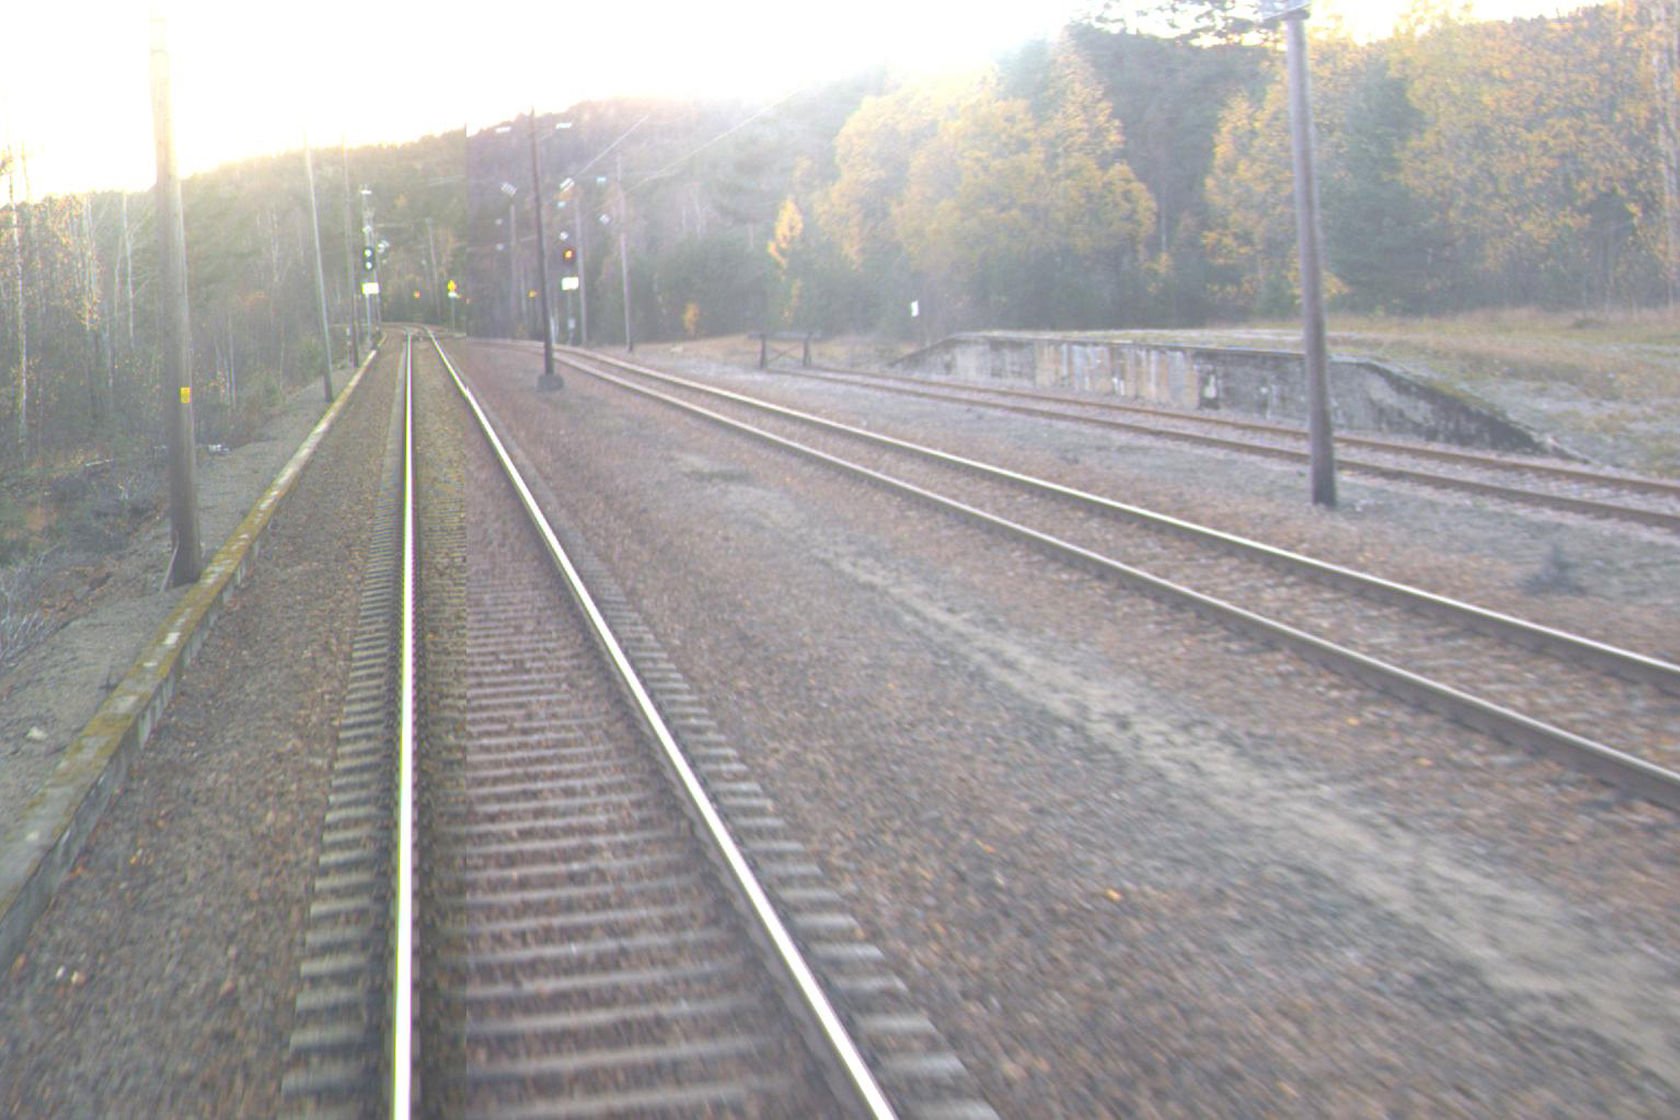 Tracks and platform at Fidjetun station